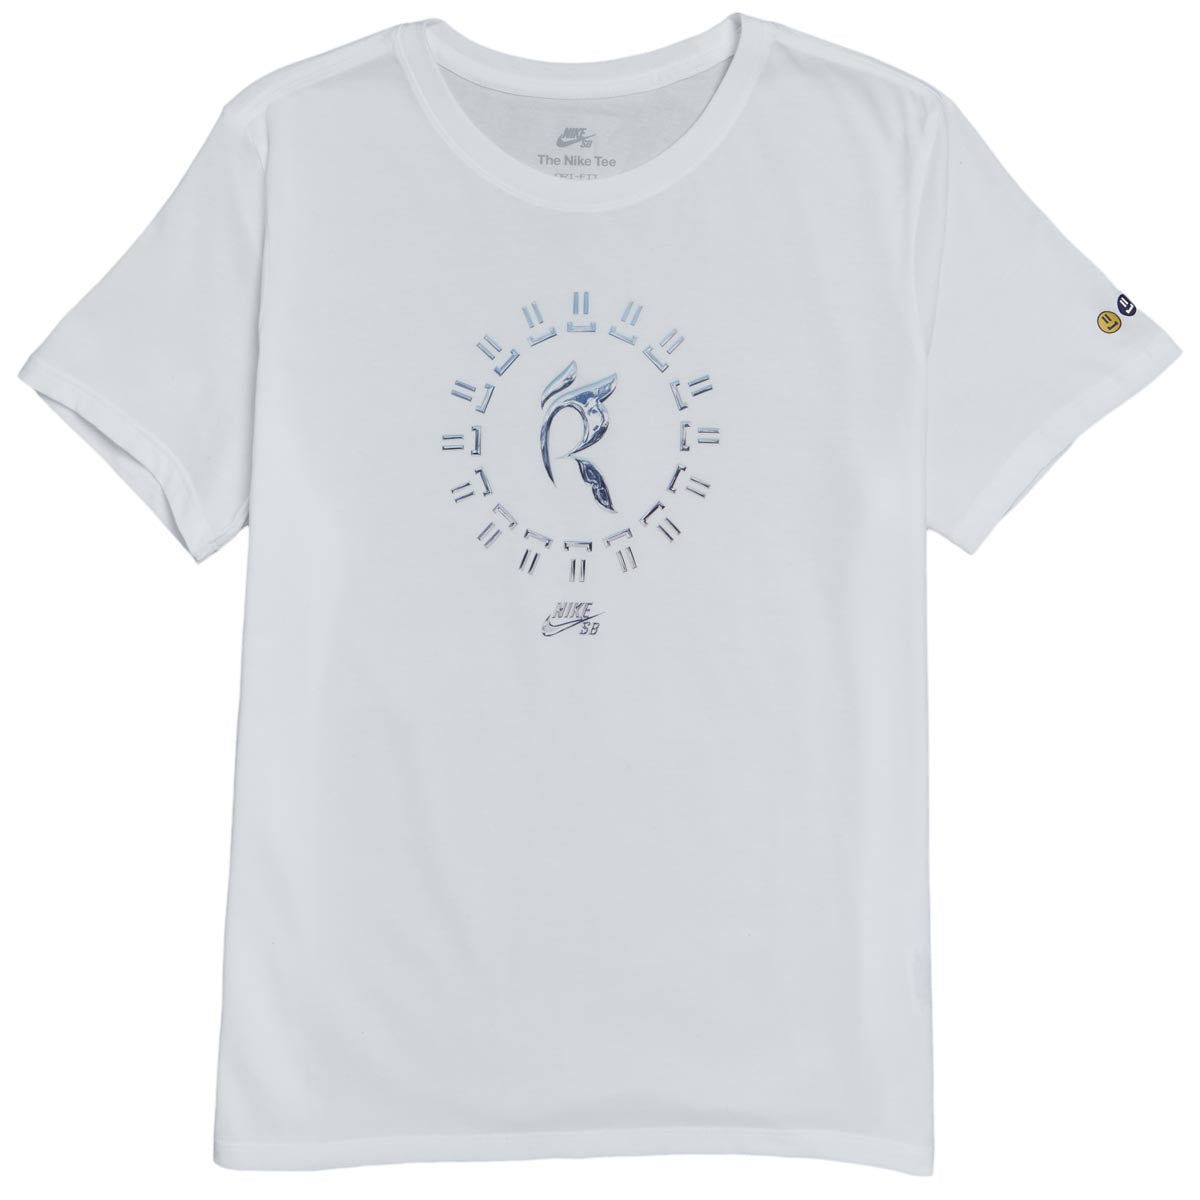 Nike SB Womens x Rayssa Leal Premium T-Shirt - White image 1